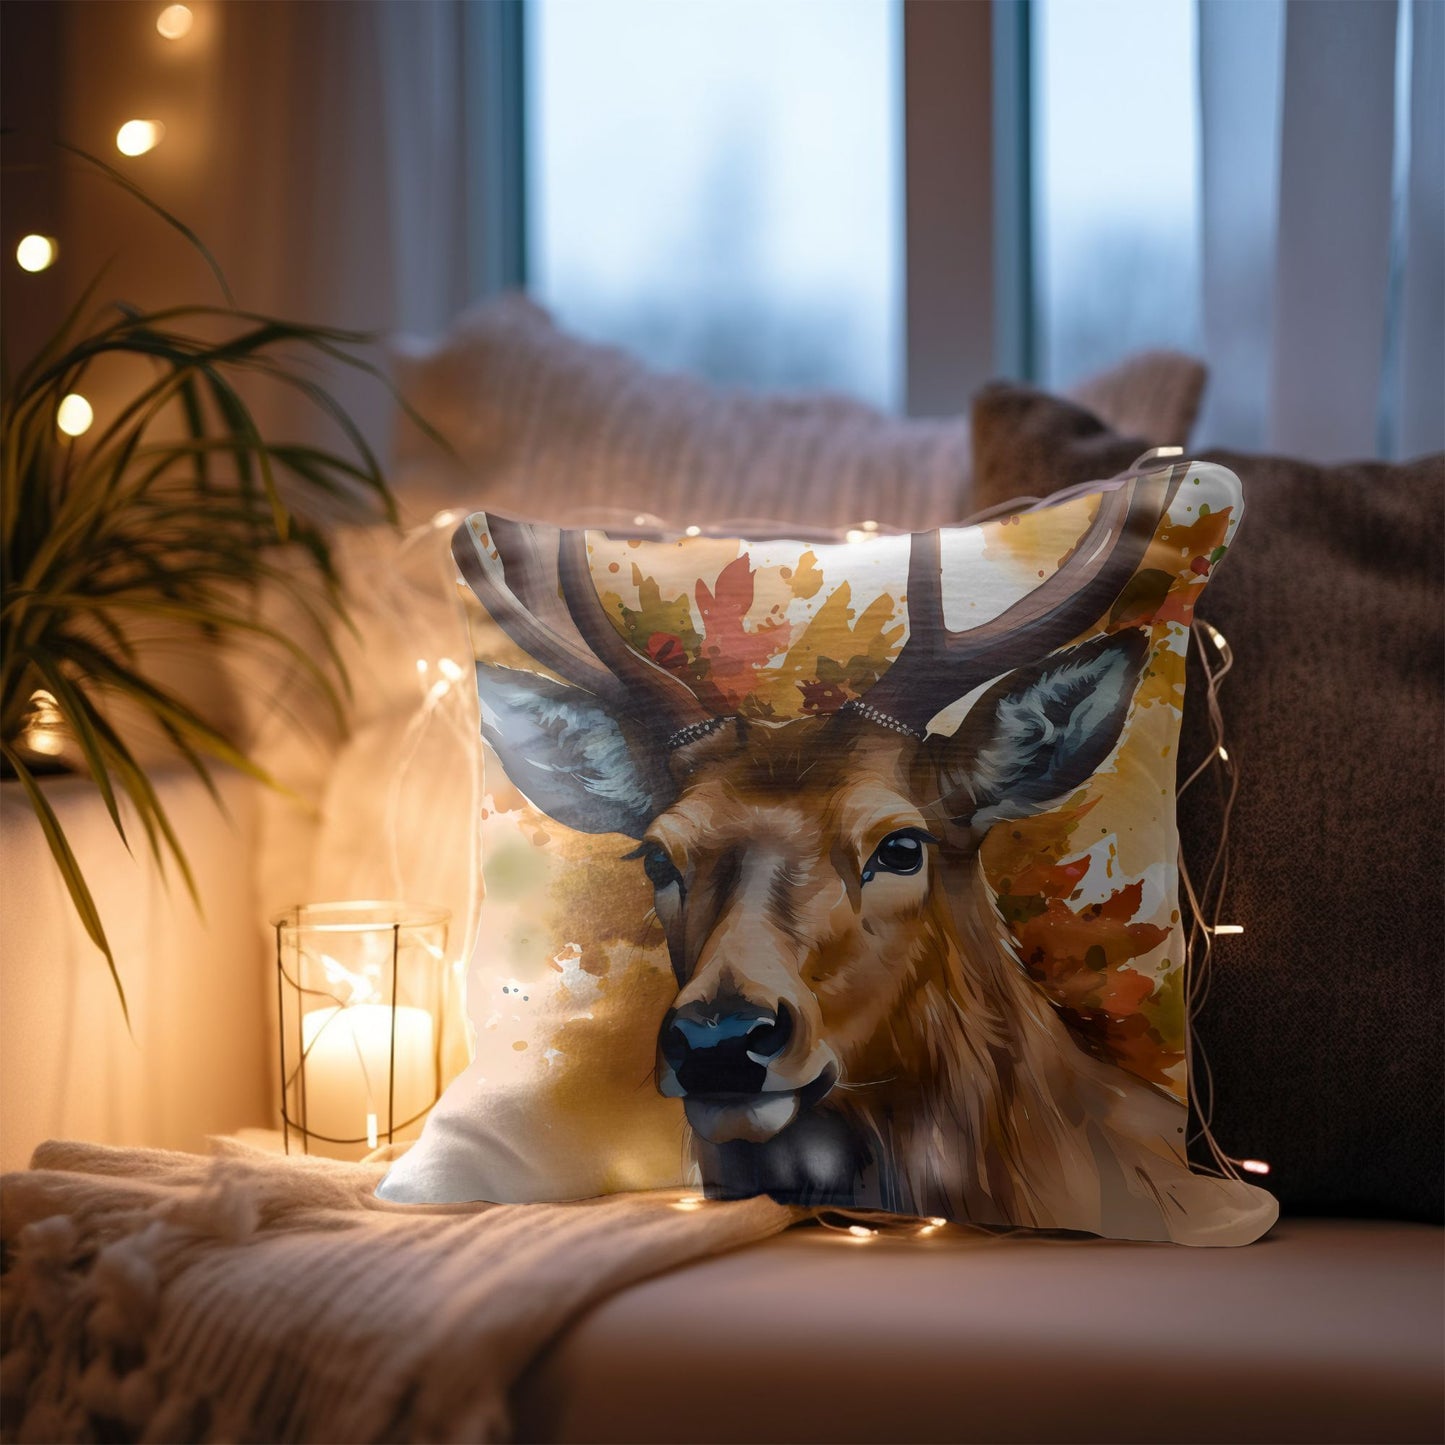 Homeezone's Whimsical Reindeer Printed Throw Pillow